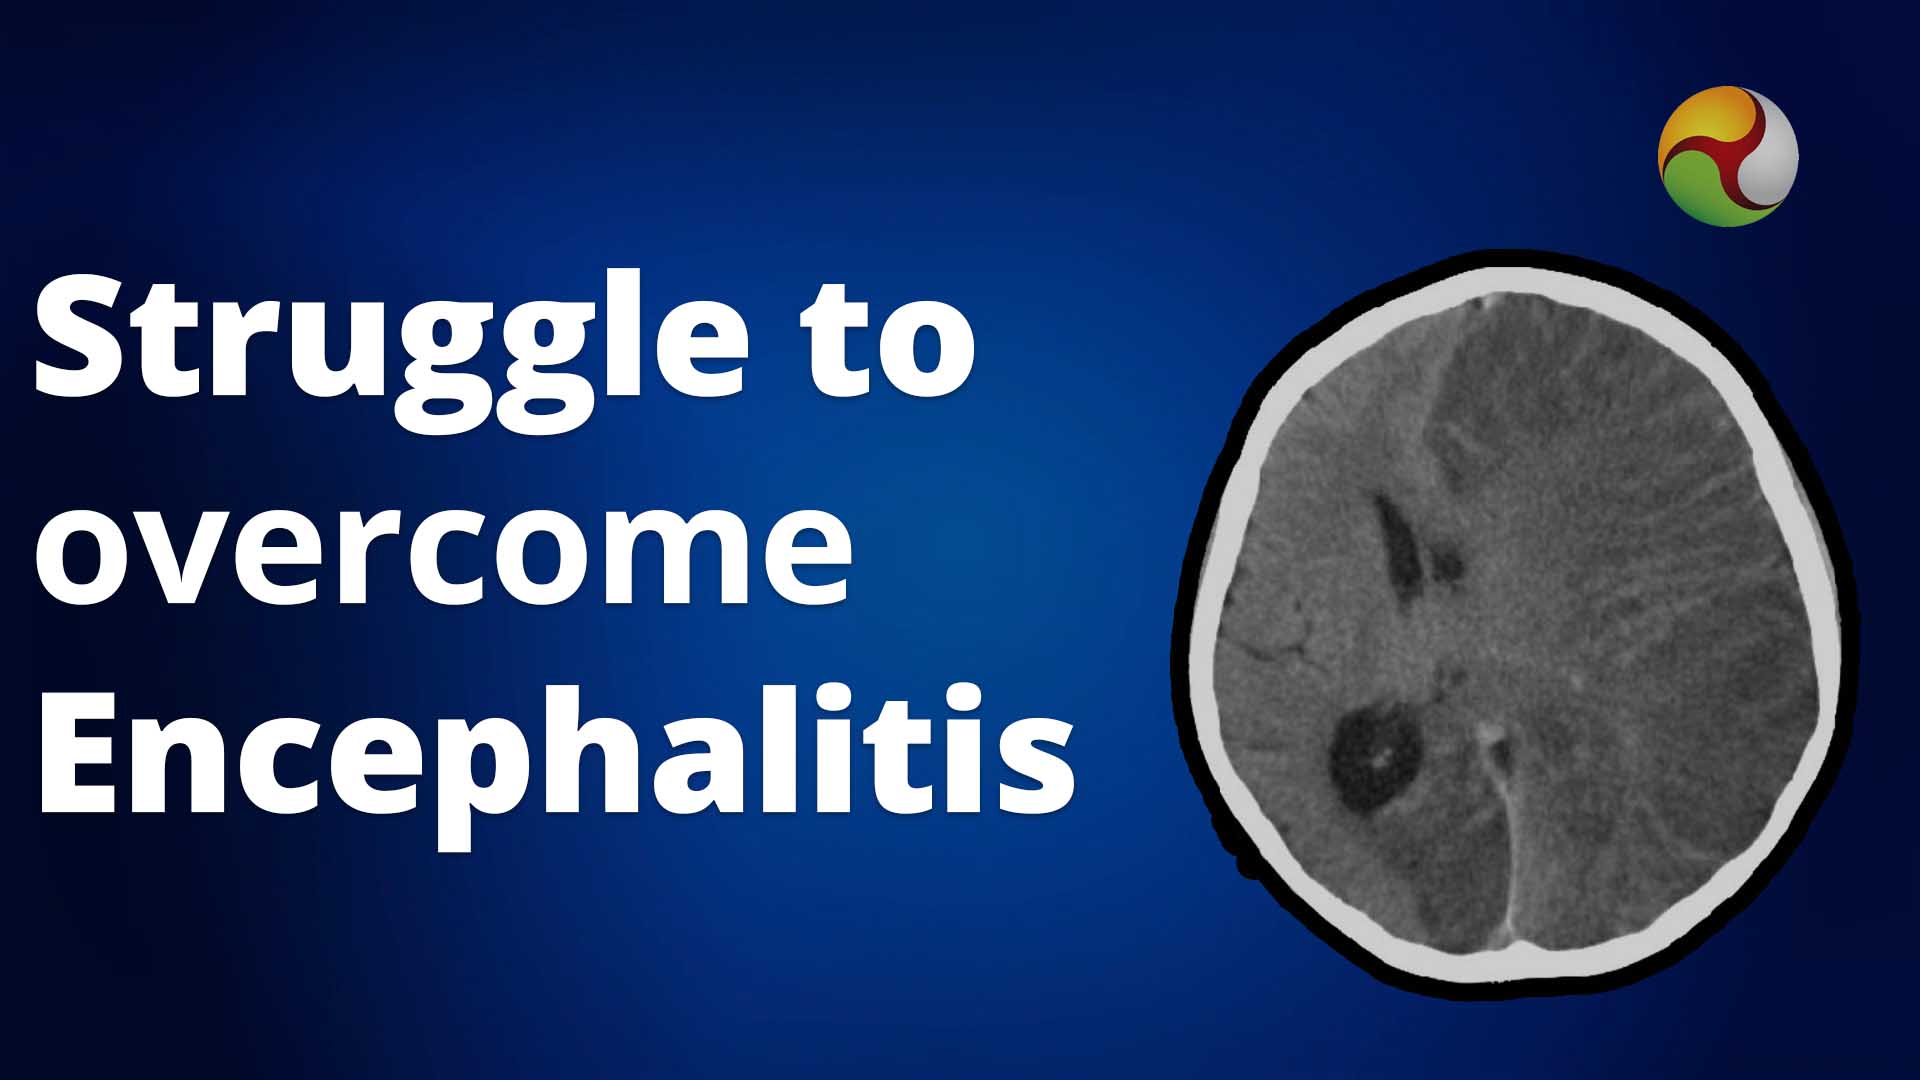 Bihar hospitals struggle to overcome Encephalitis outbreak